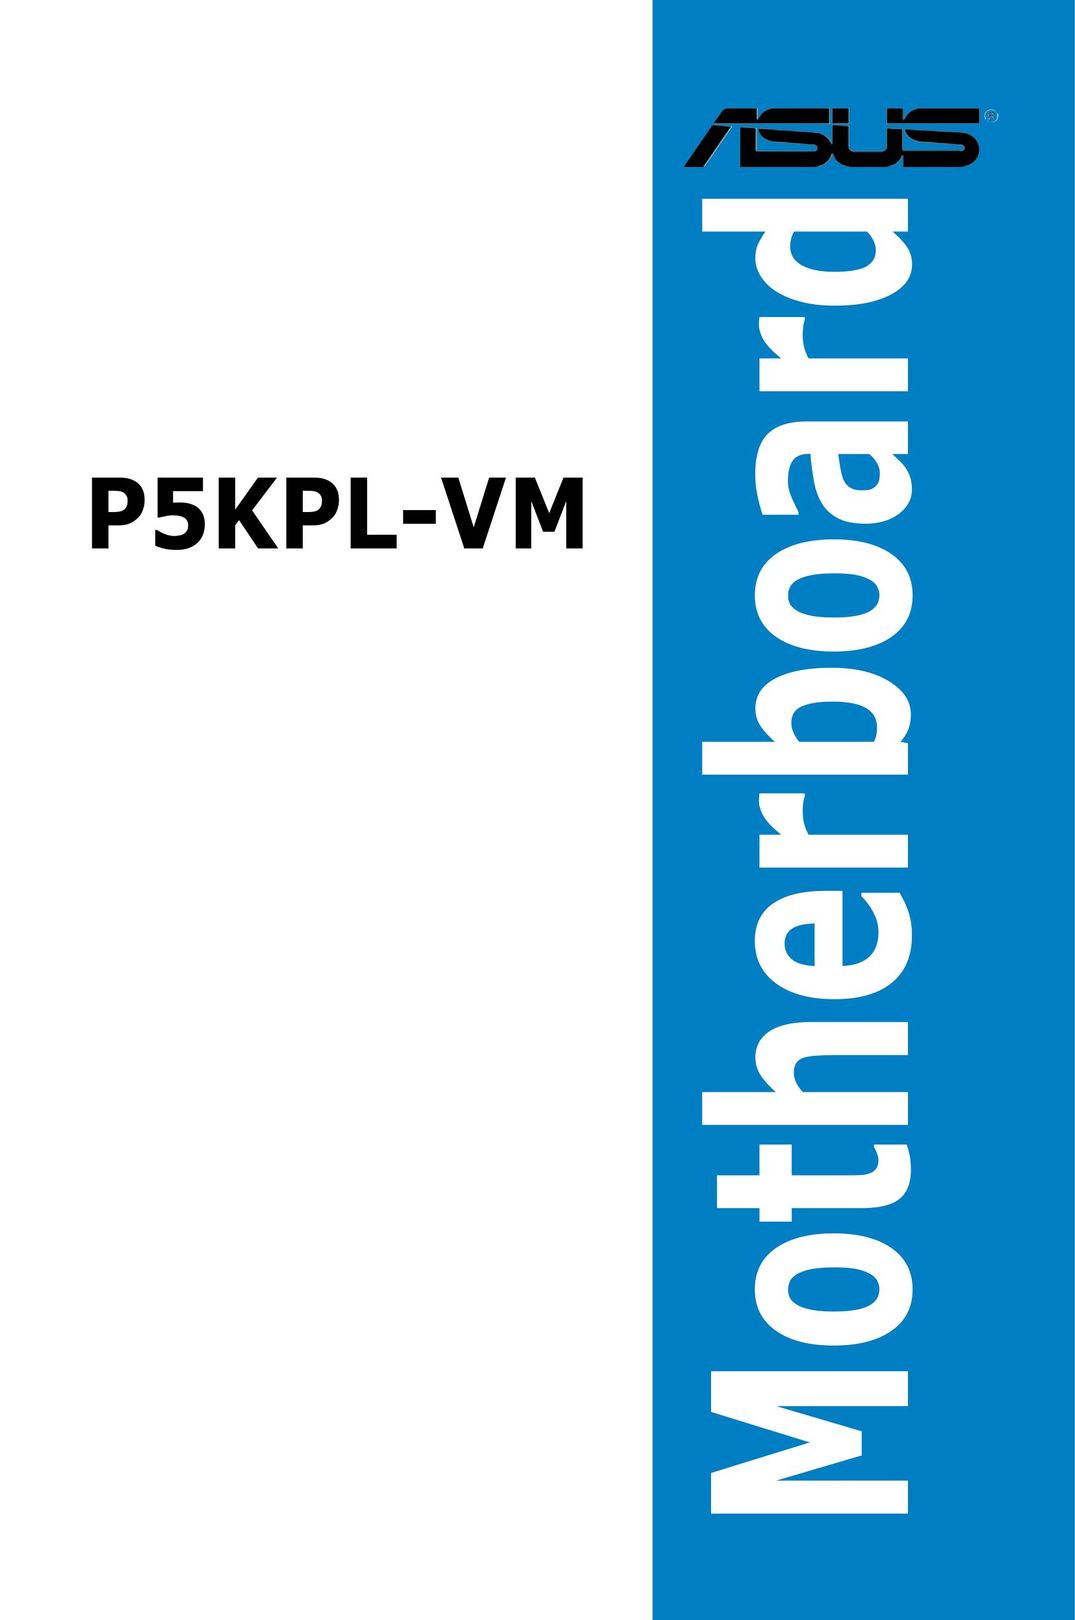 Porter-Cable P5KPL-VM Computer Hardware User Manual